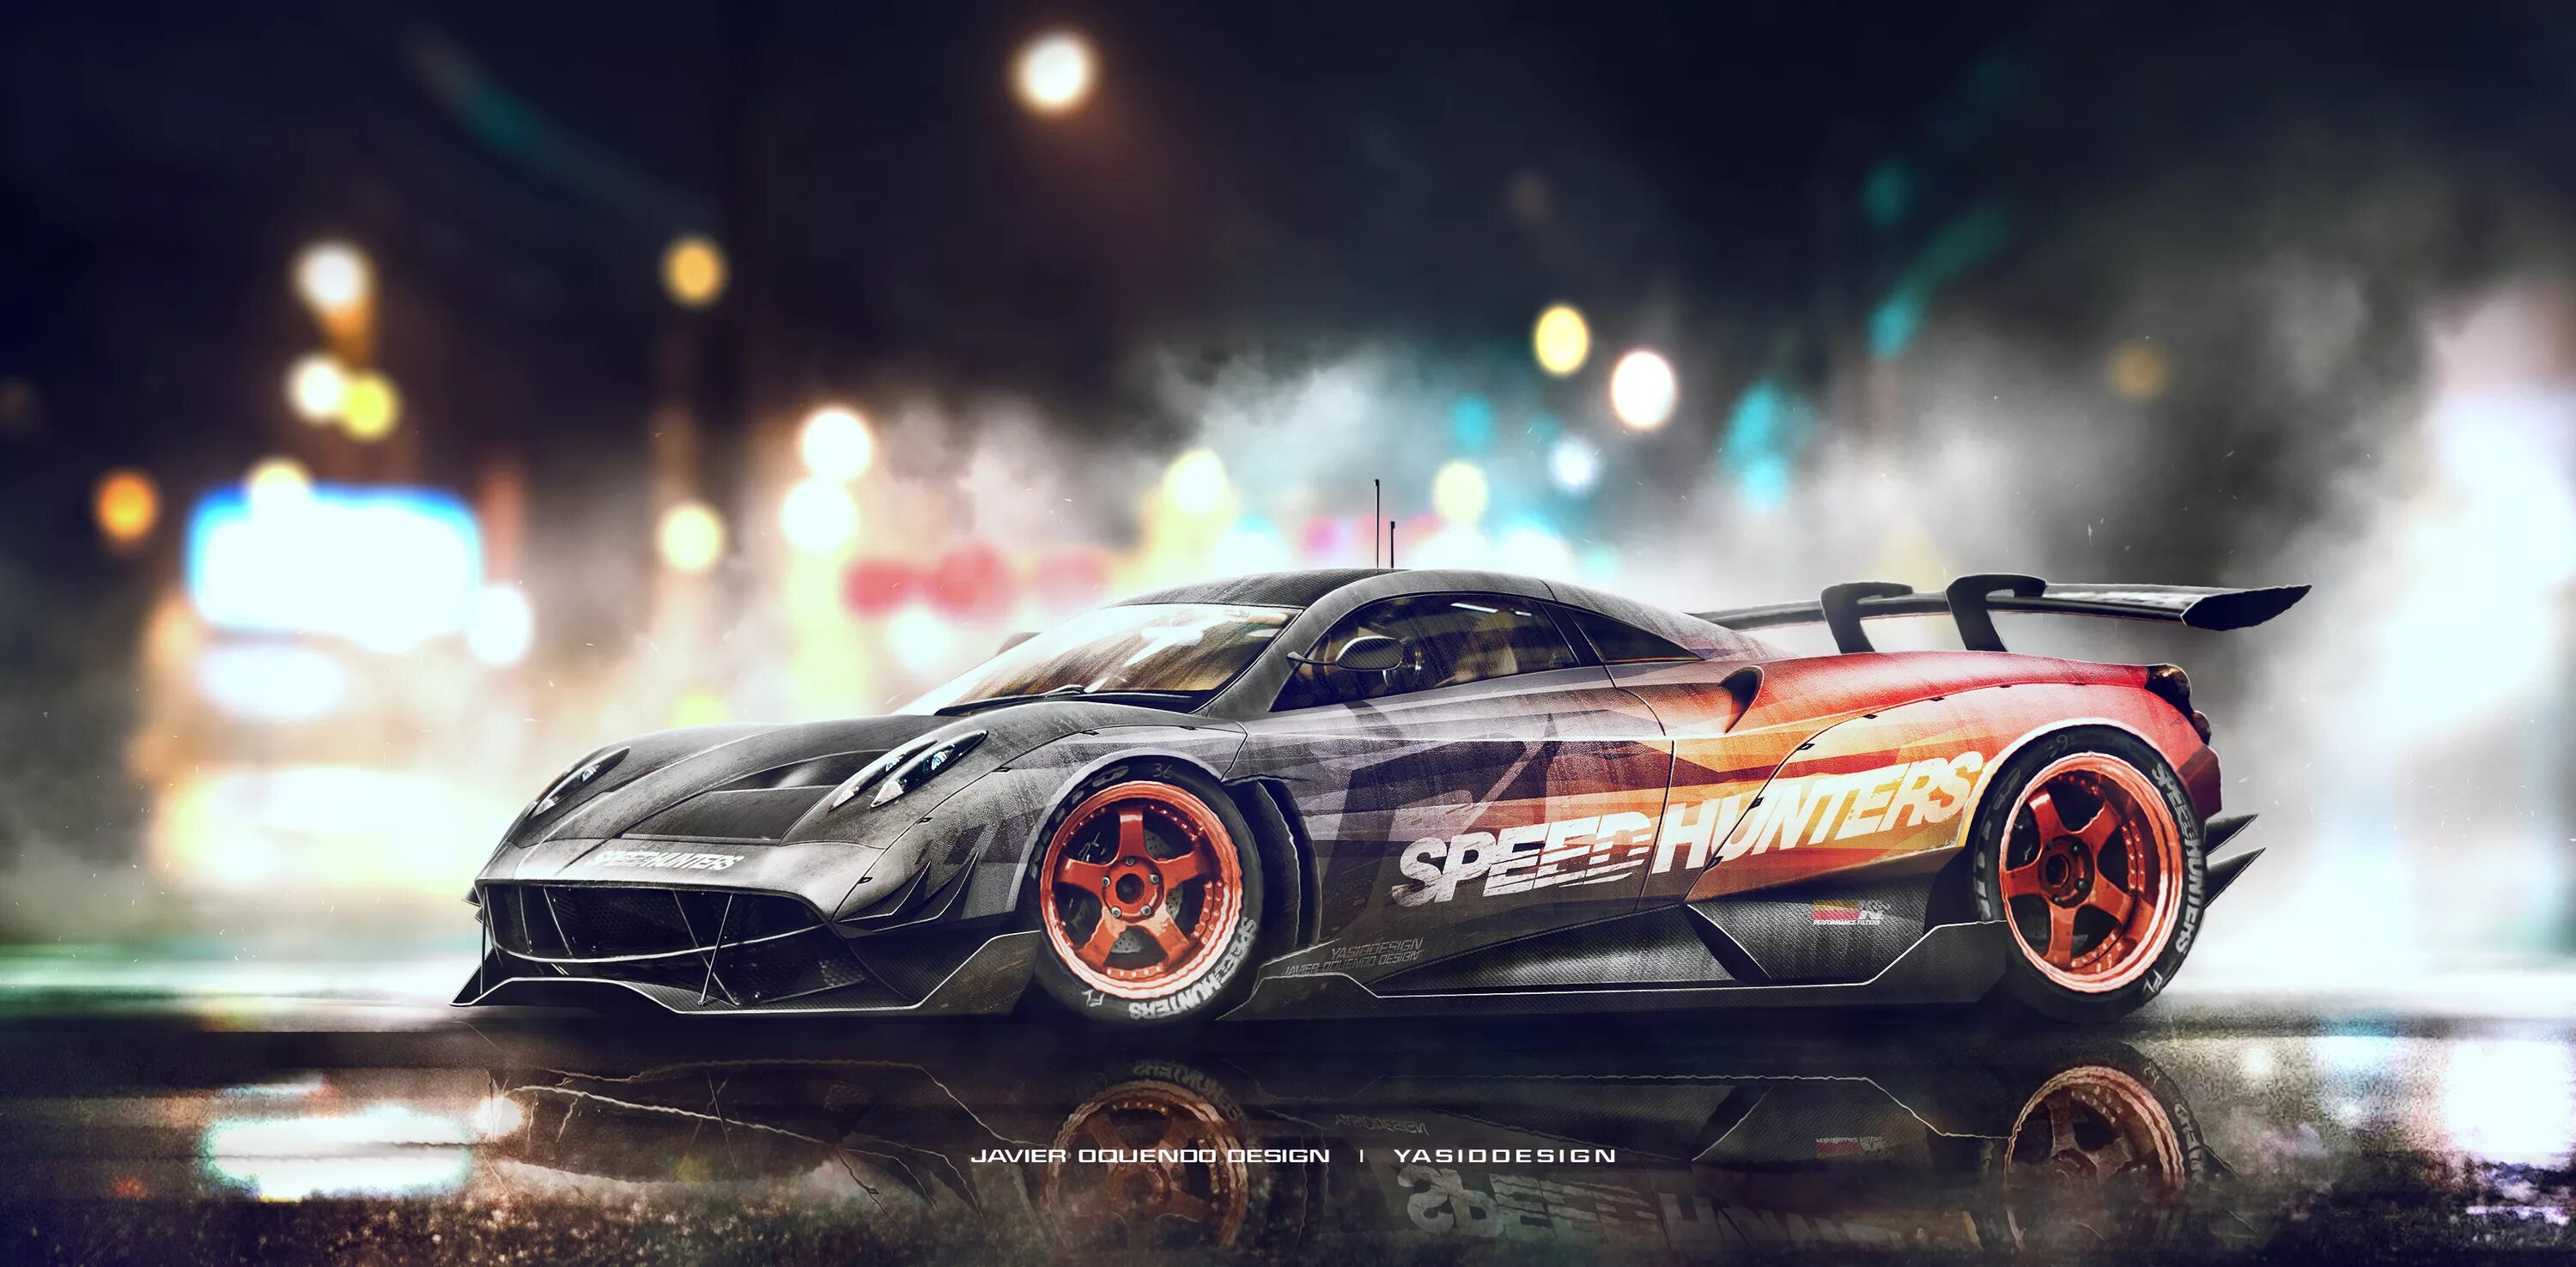 Speed tune. Pagani Huayra Speedhunters. Need for Speed Pagani. Need for Speed 2015 Tribute yasiddesign. Yasiddesign Супра.